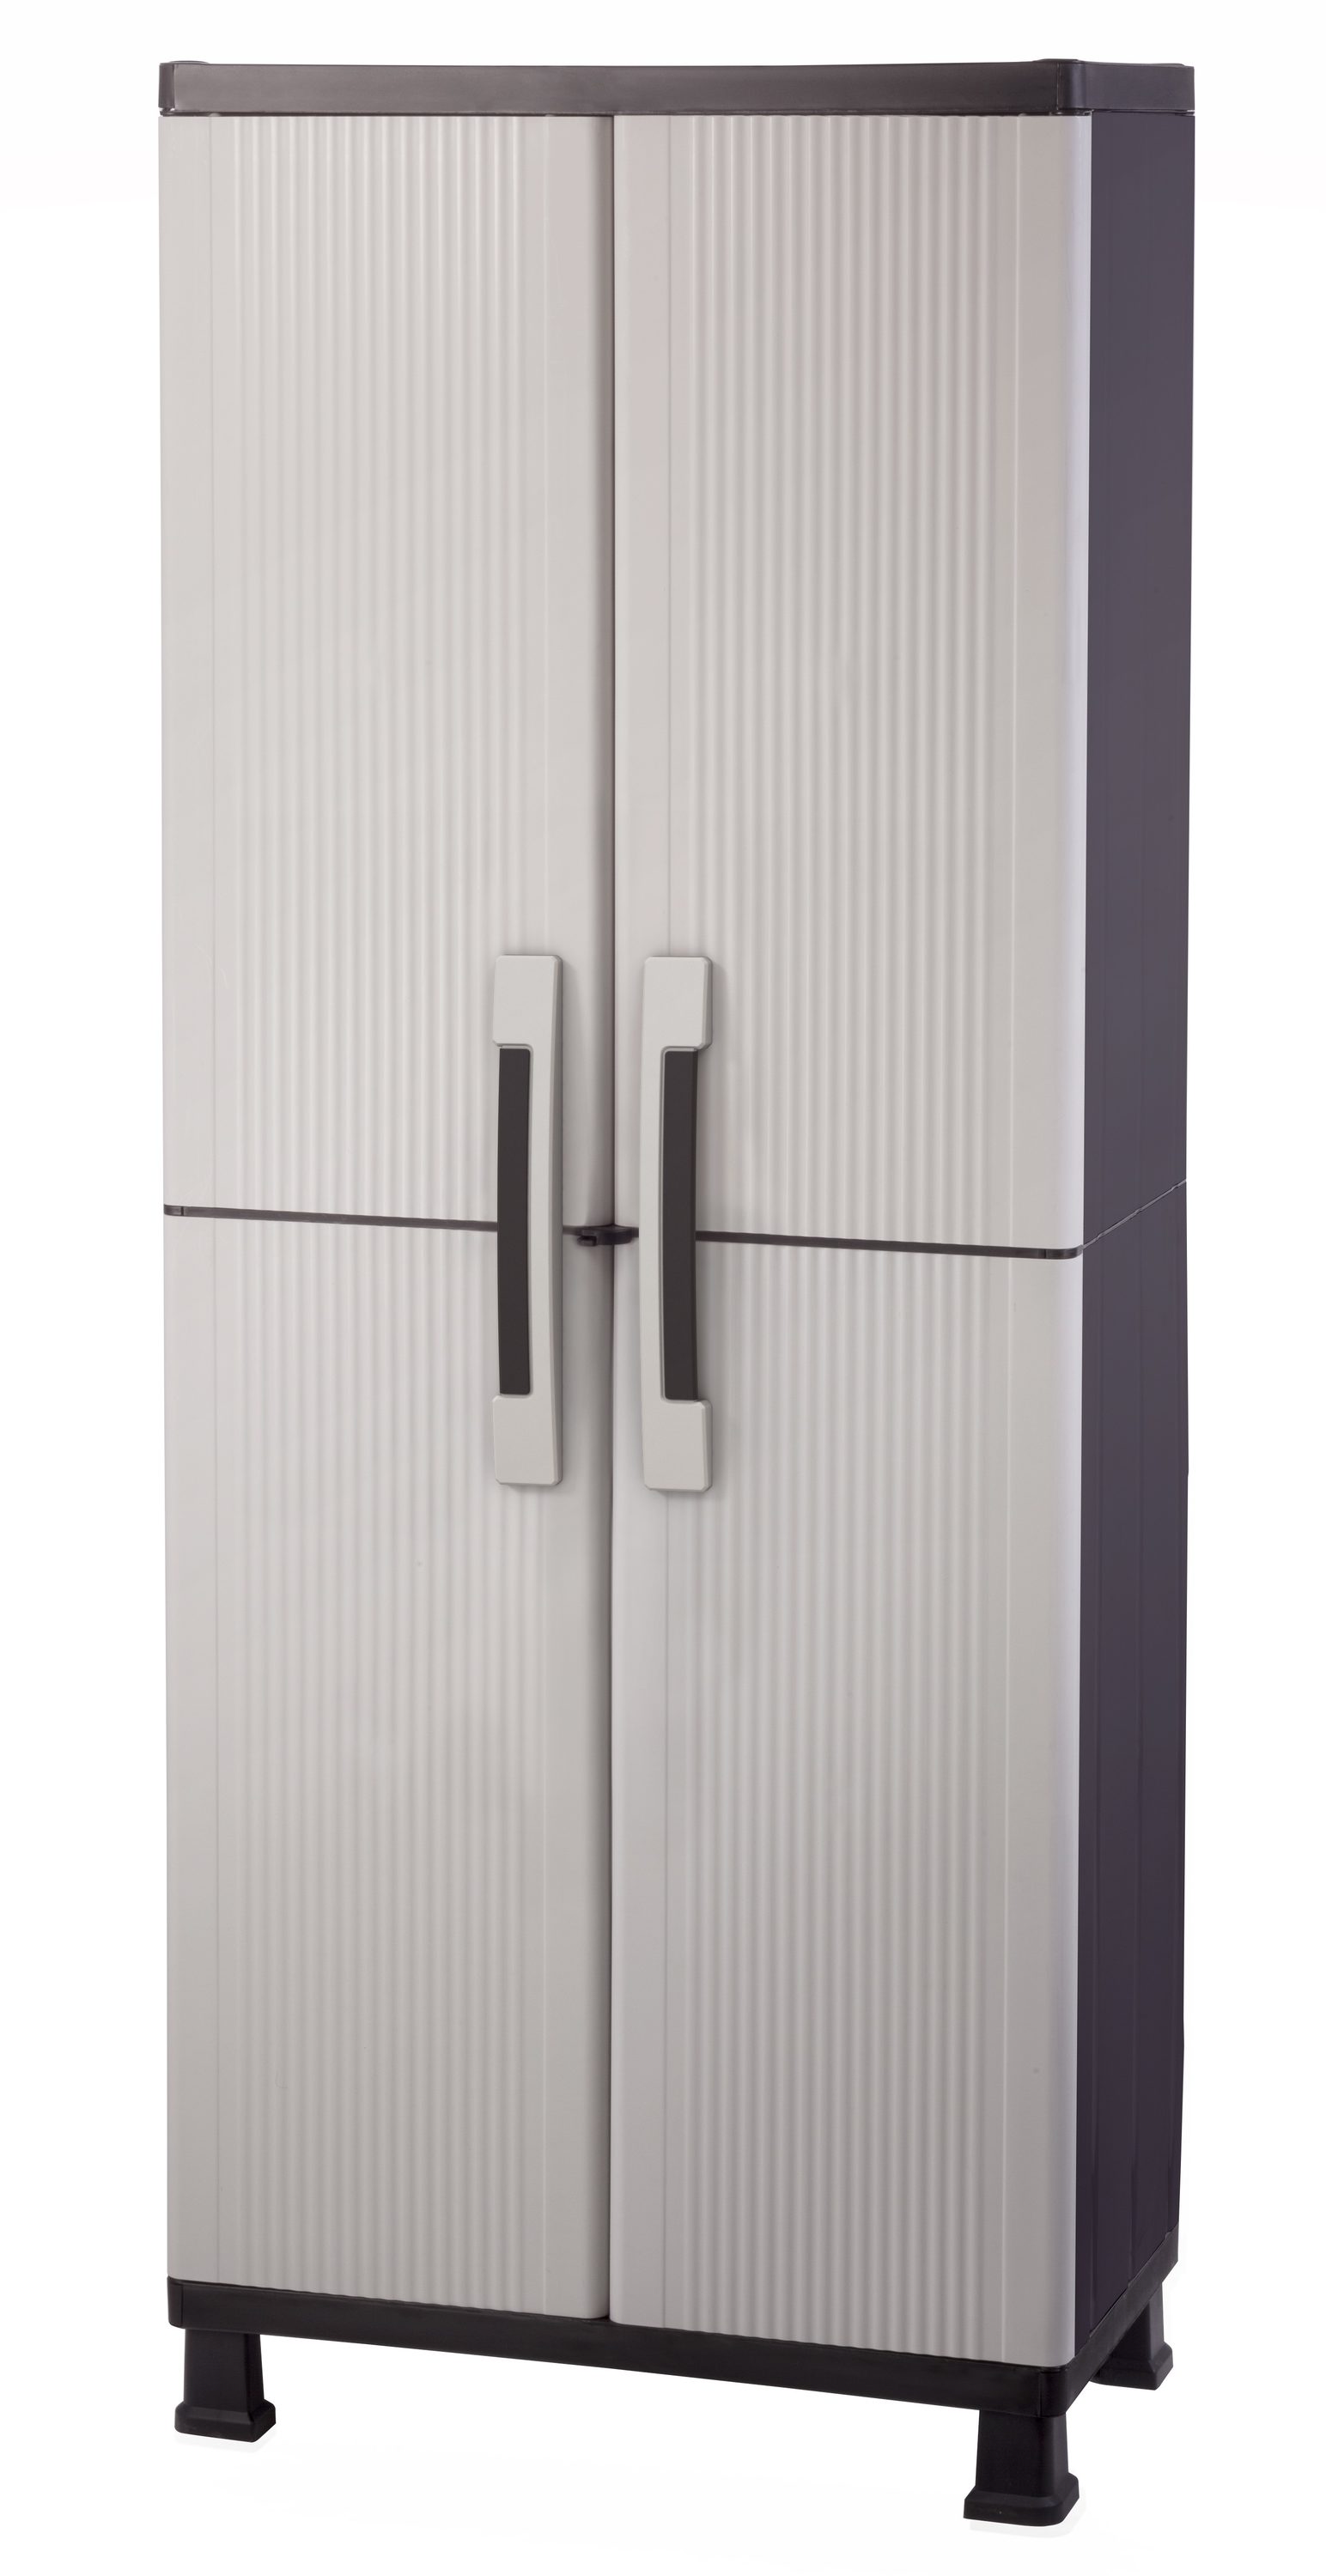 Garage Cabinet Storage 4 Adjustable Shelves 2 Doors Keter Plastic Freestanding 